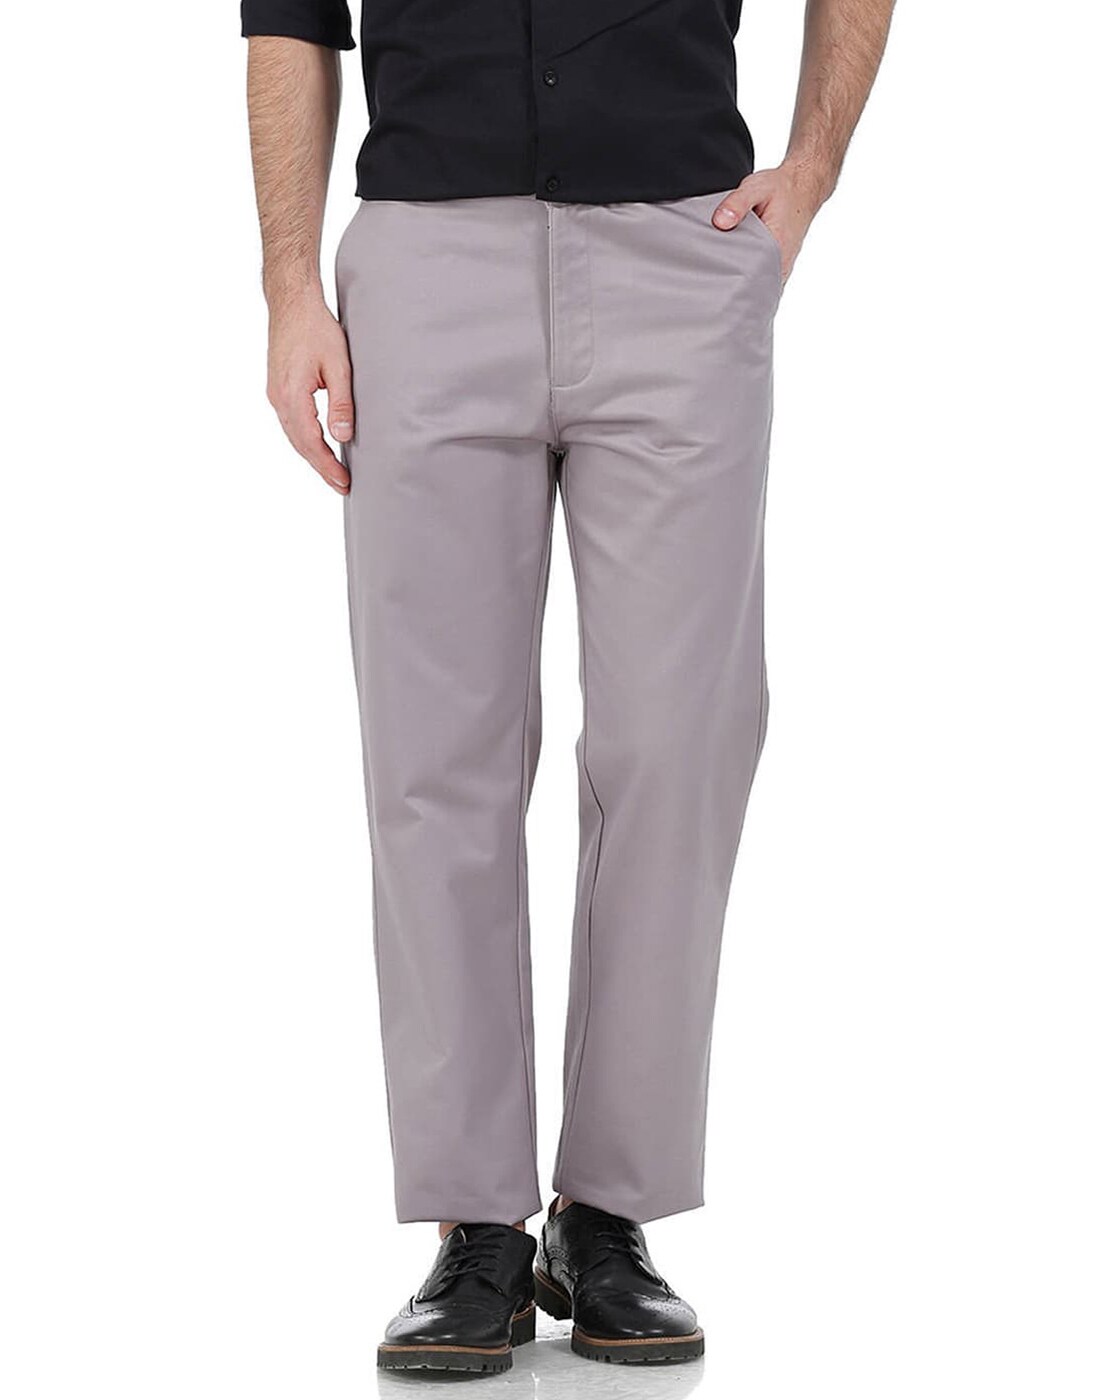 Buy Grey Trousers  Pants for Men by BASICS Online  Ajiocom